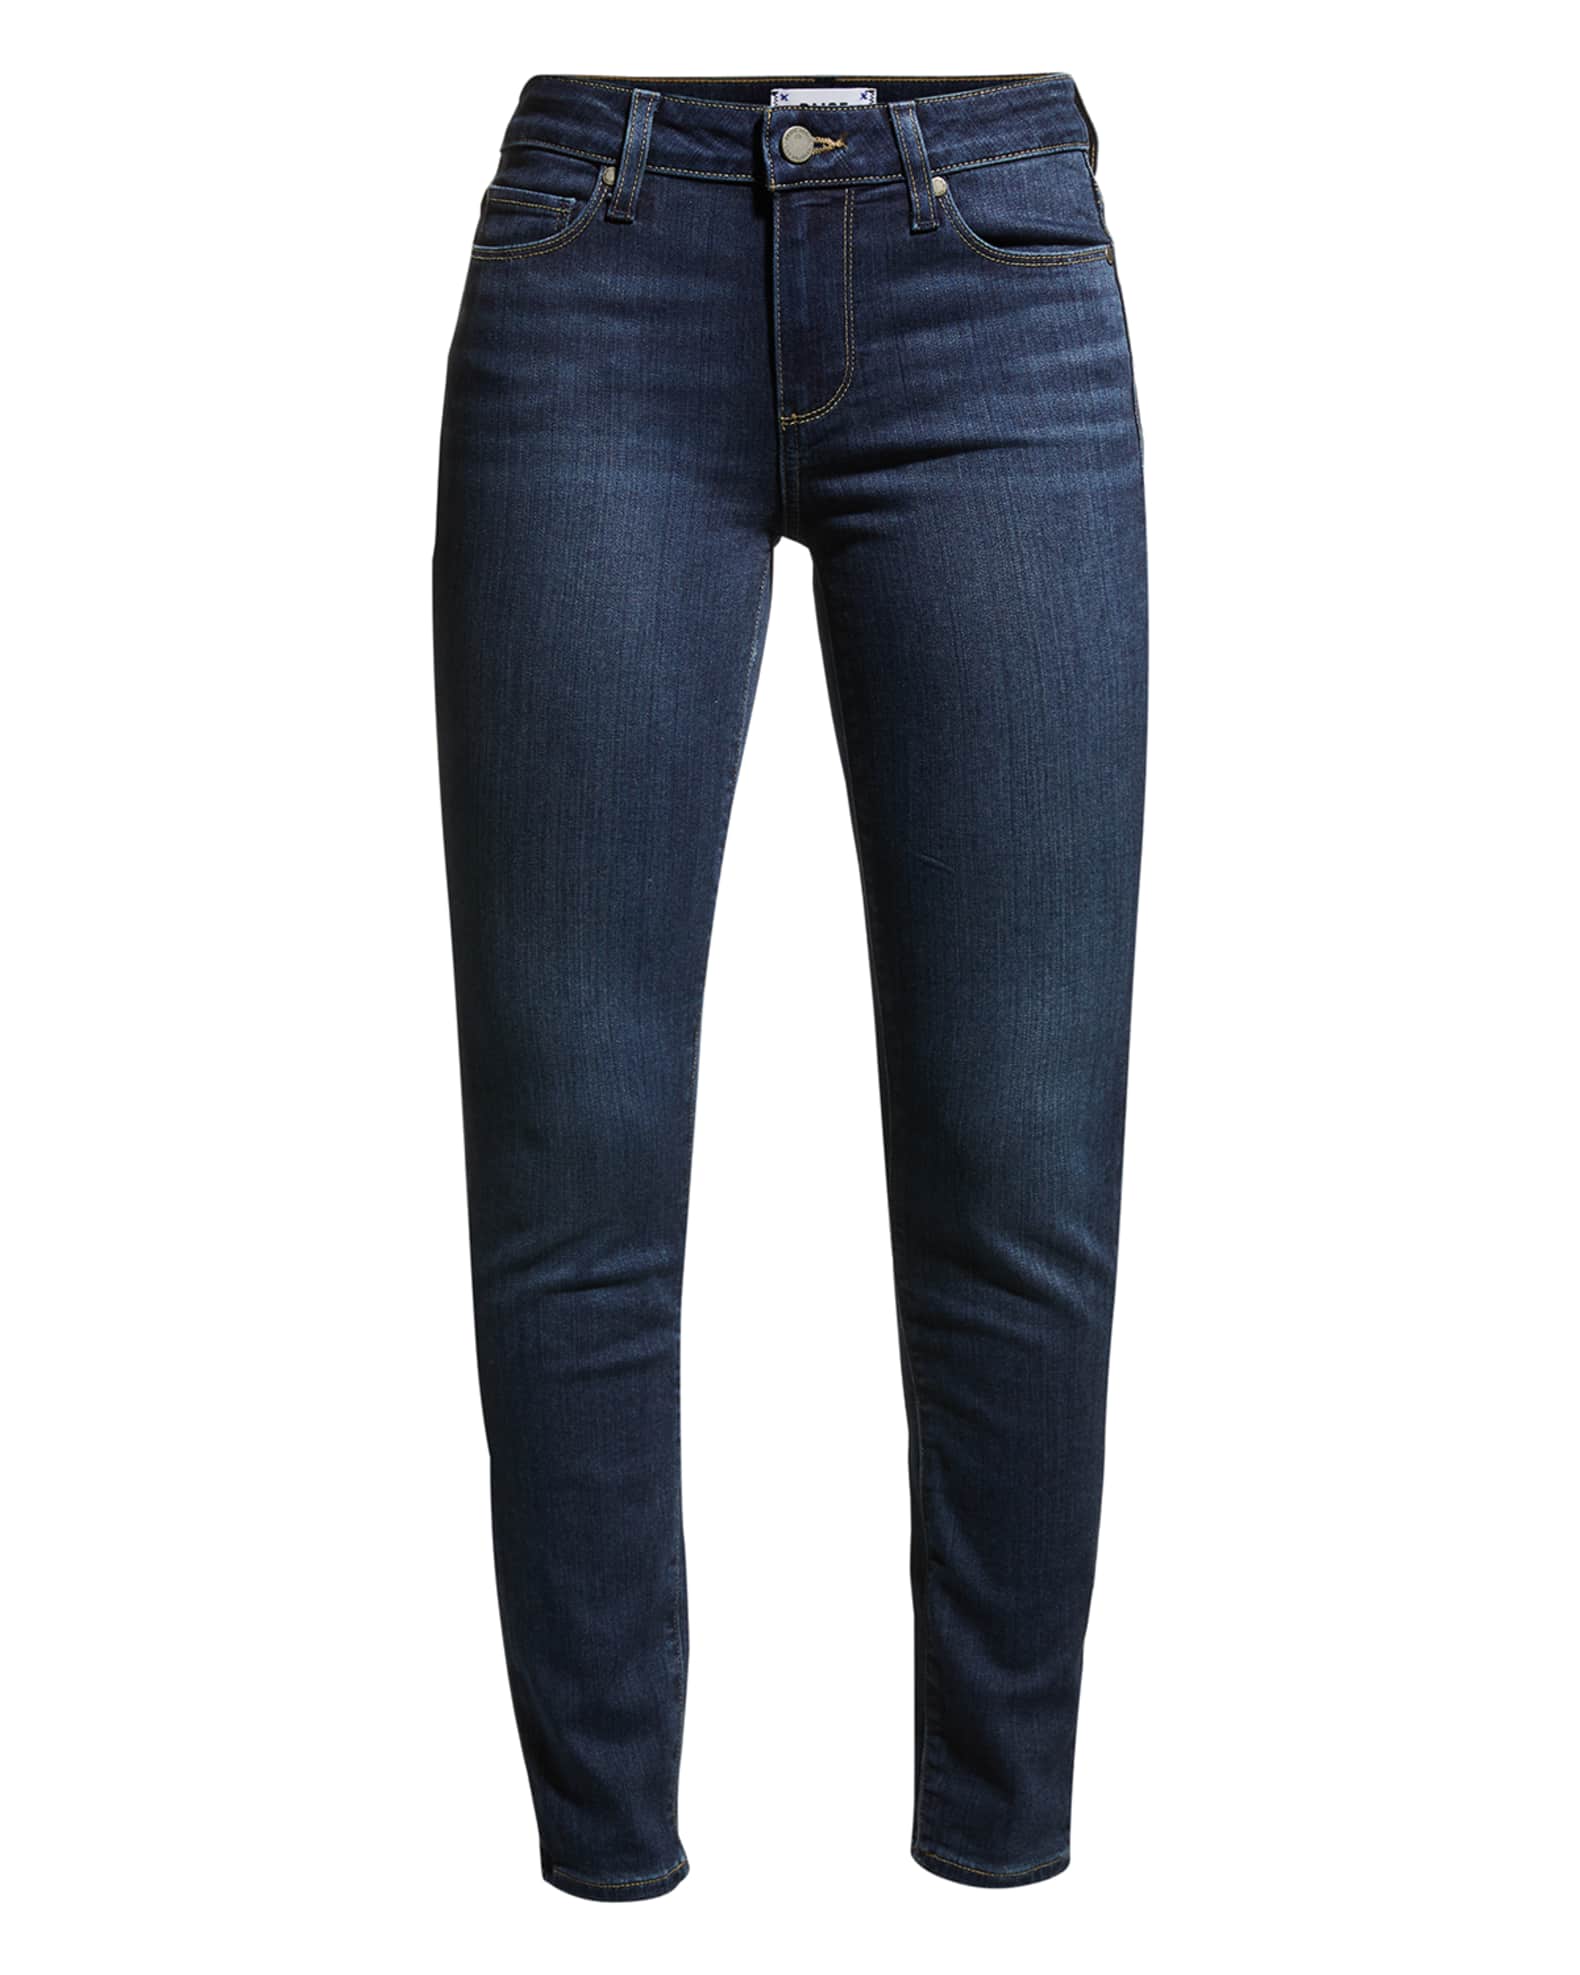 PAIGE Verdugo Ultra-Skinny Ankle Jeans, Nottingham | Neiman Marcus